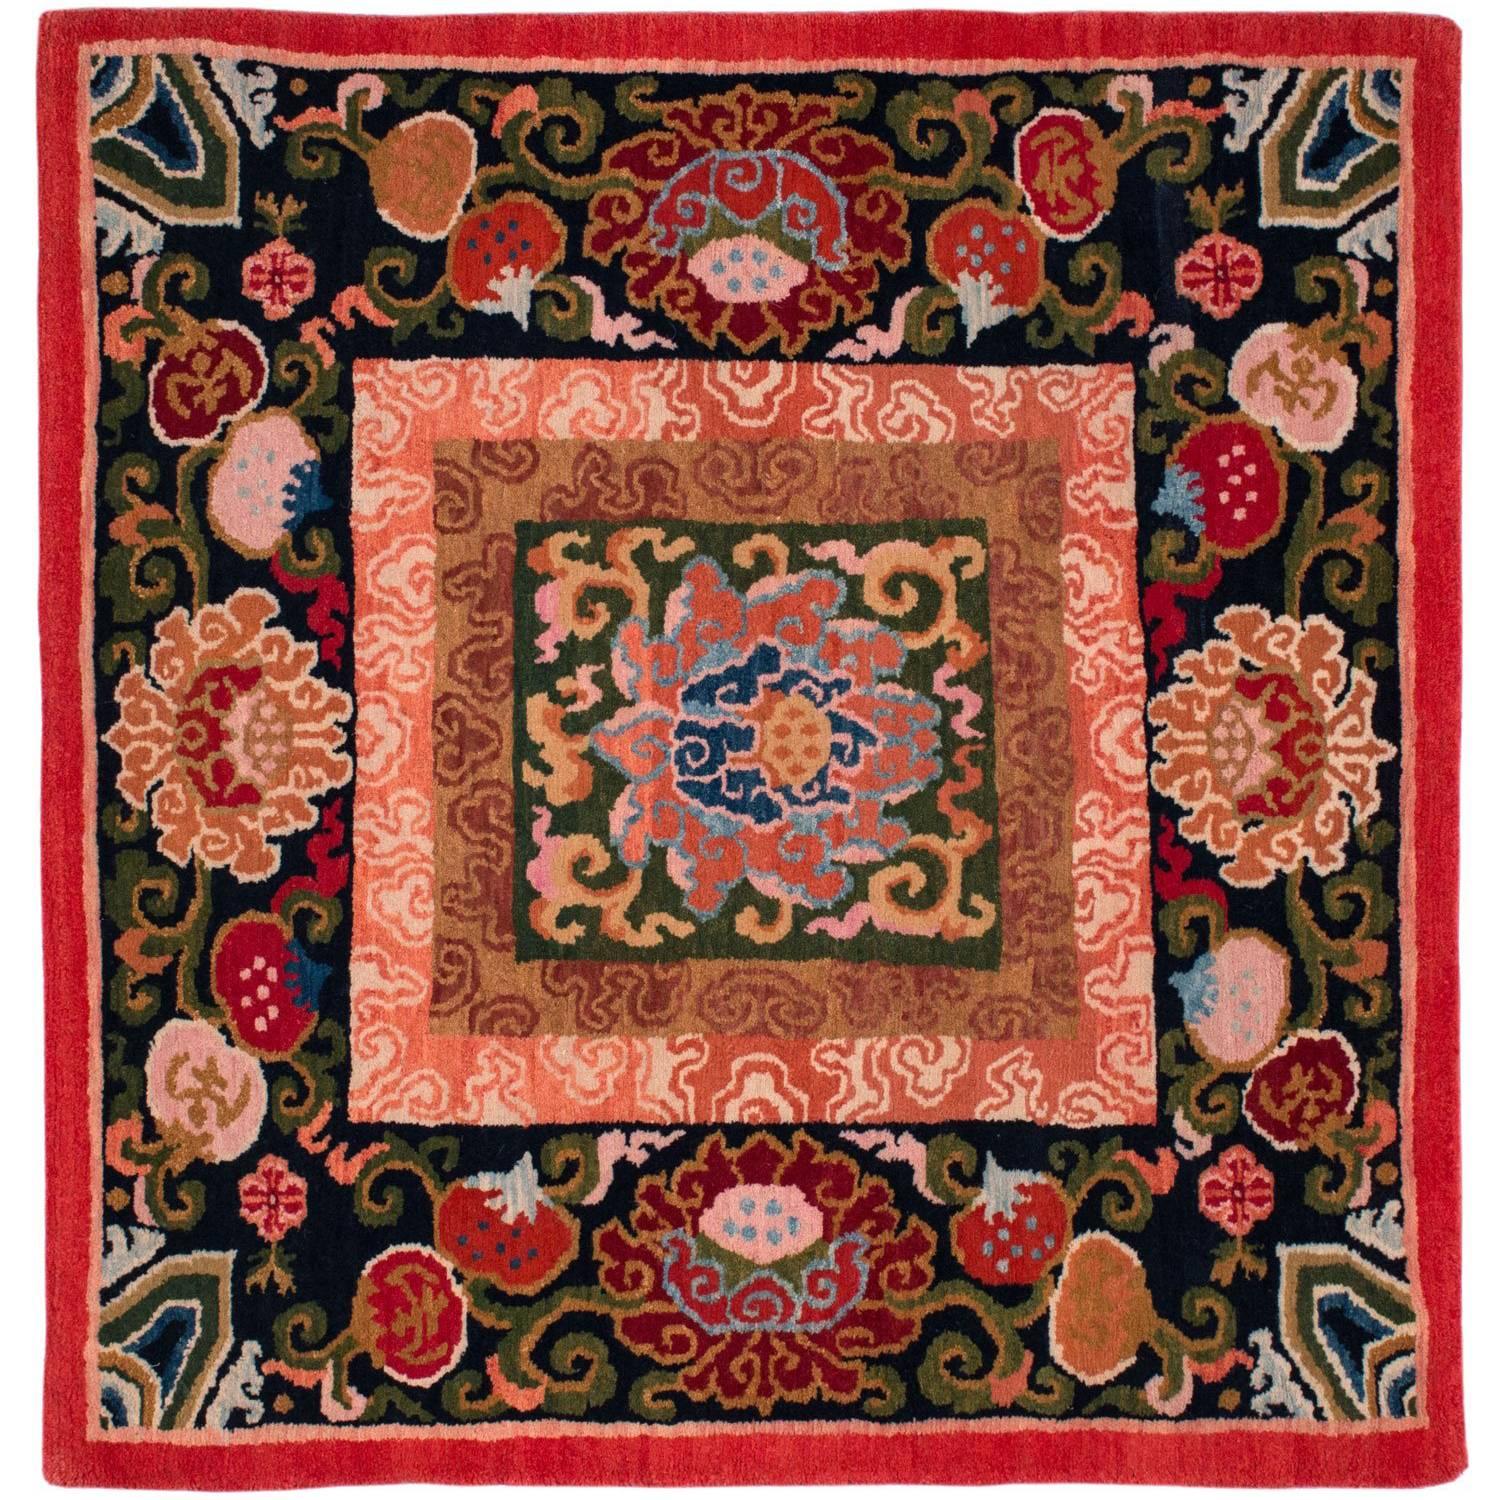 Small Square Tibetan Area Rug/Meditation Mat